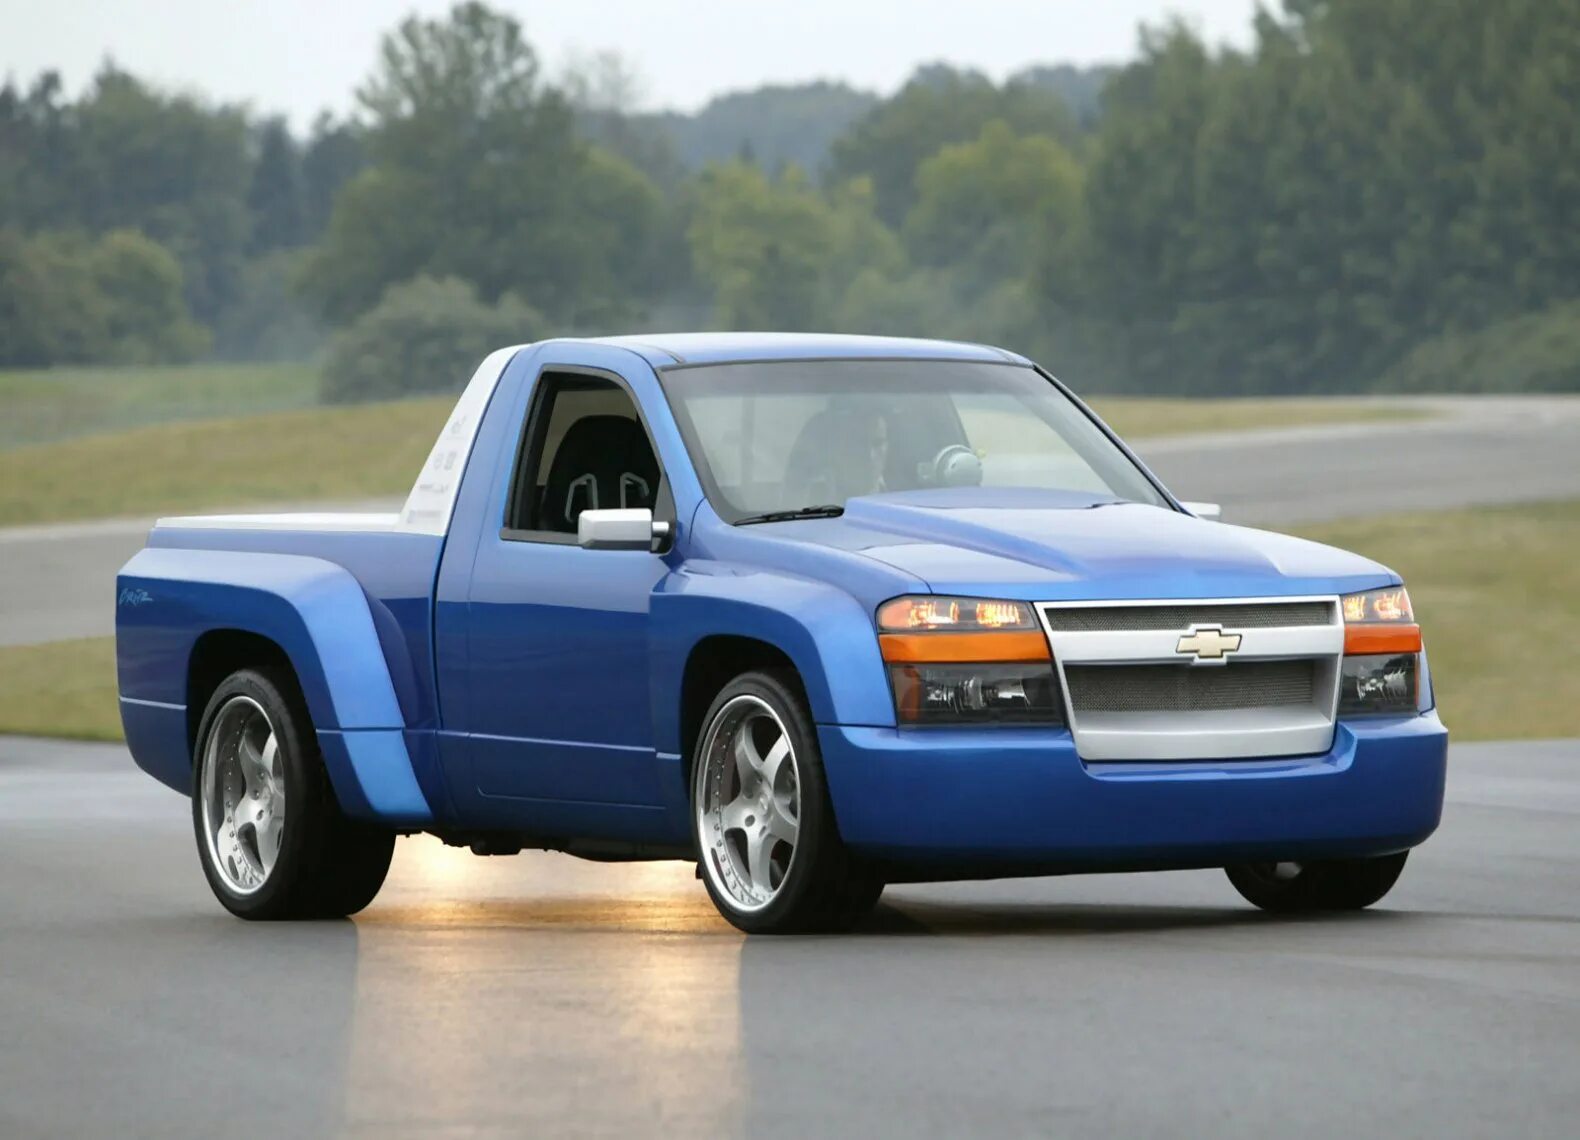 Шевроле 1.3 турбо. Chevrolet Colorado 2004. Chevrolet Concept 2004. Chevrolet Pickup 2005. Американский пикап Шевроле.